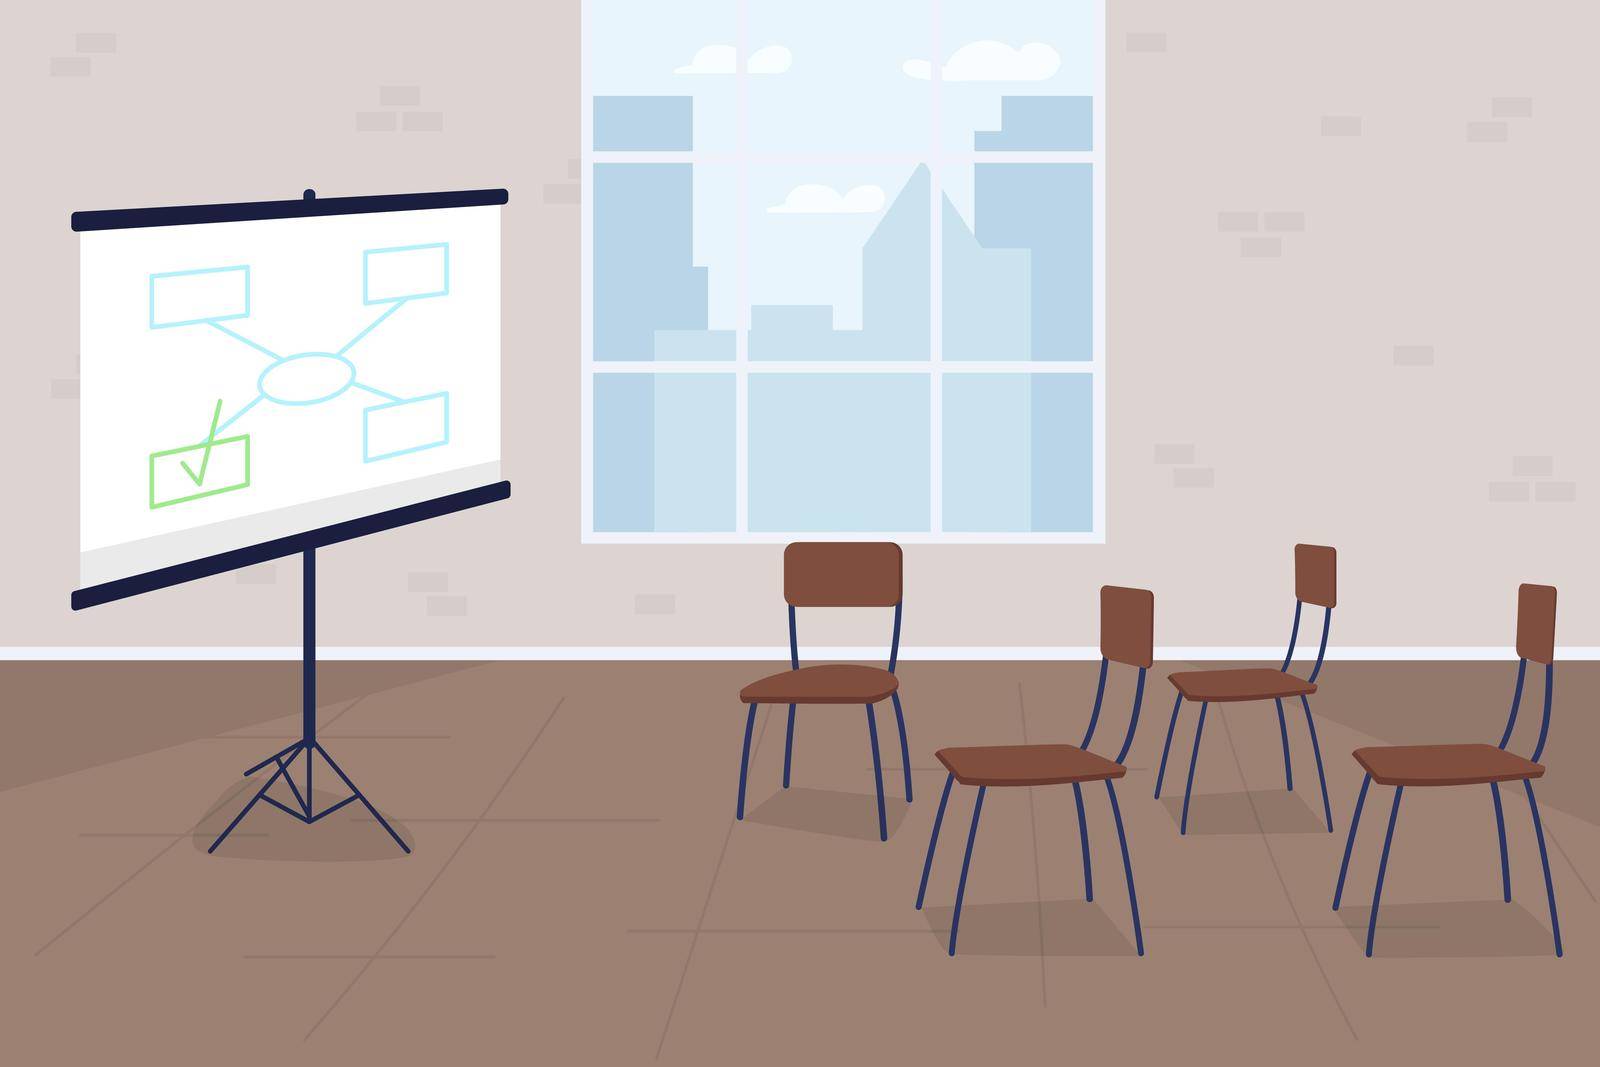 Business training flat concept vector illustration. Project screen with diagram. Company conference. Corporate presentation 2D cartoon scene for web design. Office interior creative idea